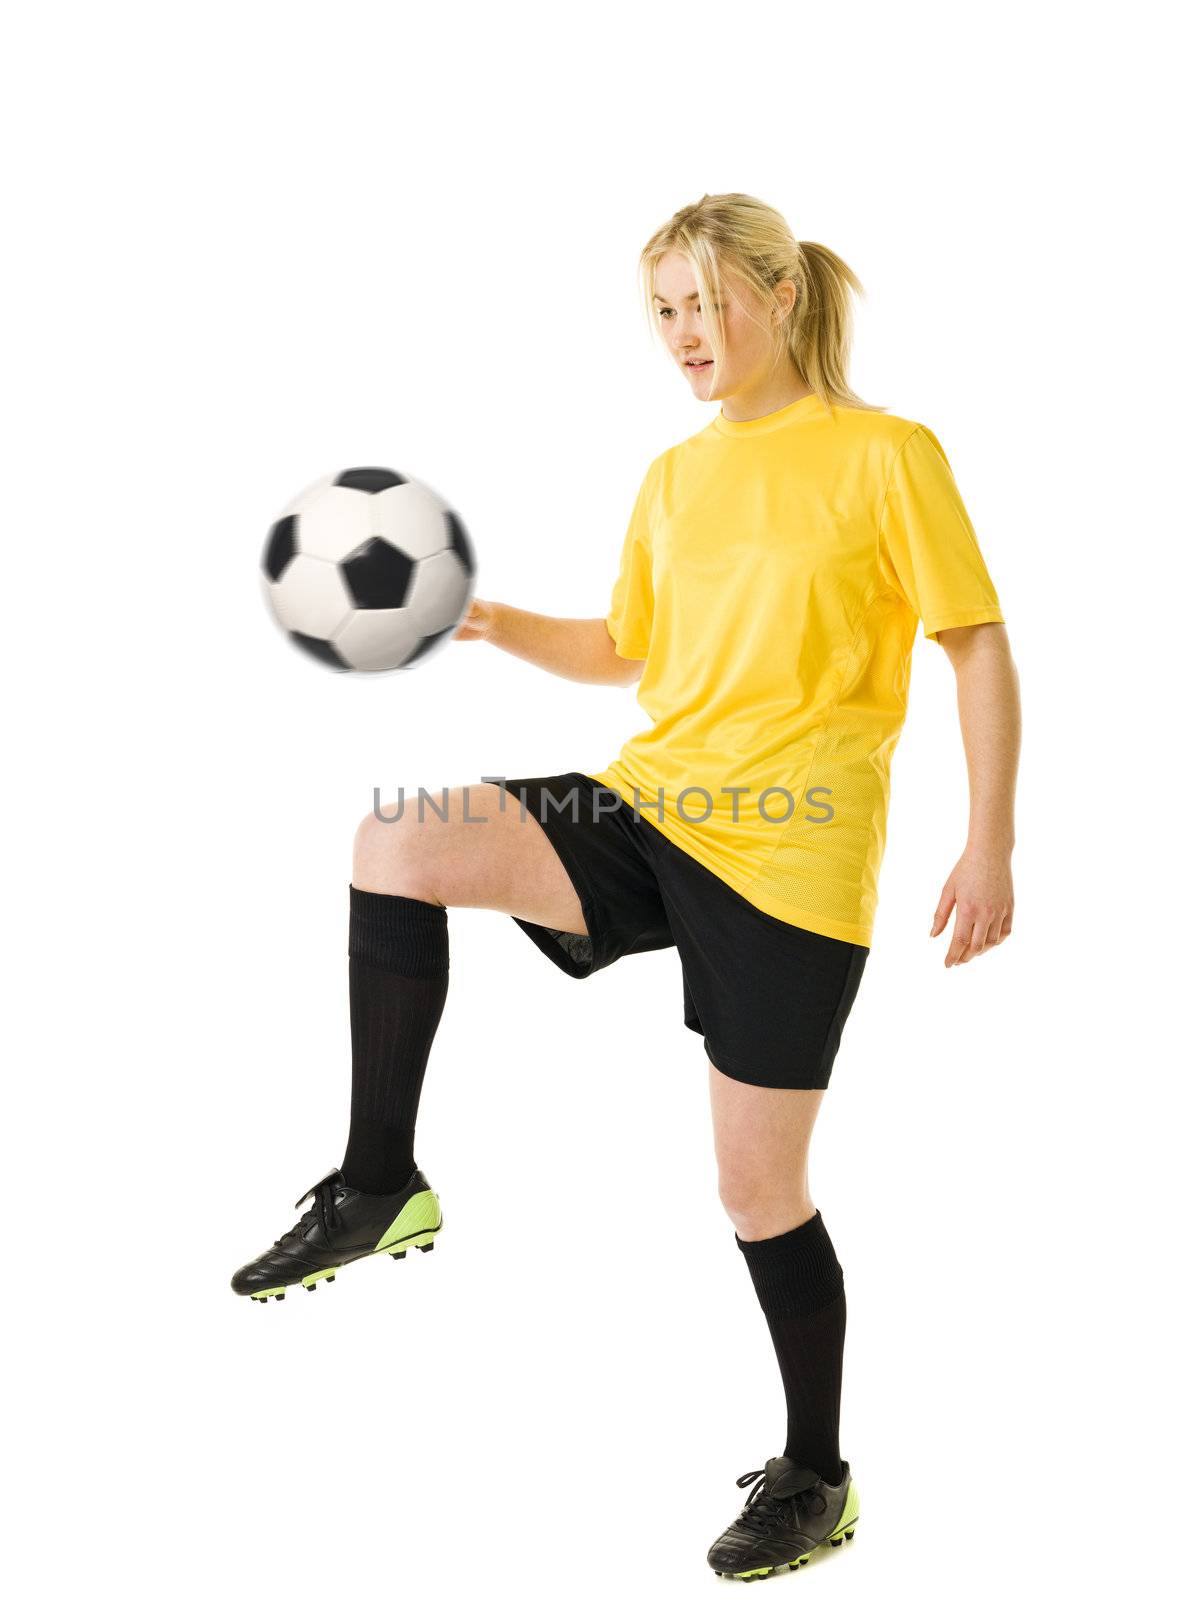 Soccer Woman by gemenacom